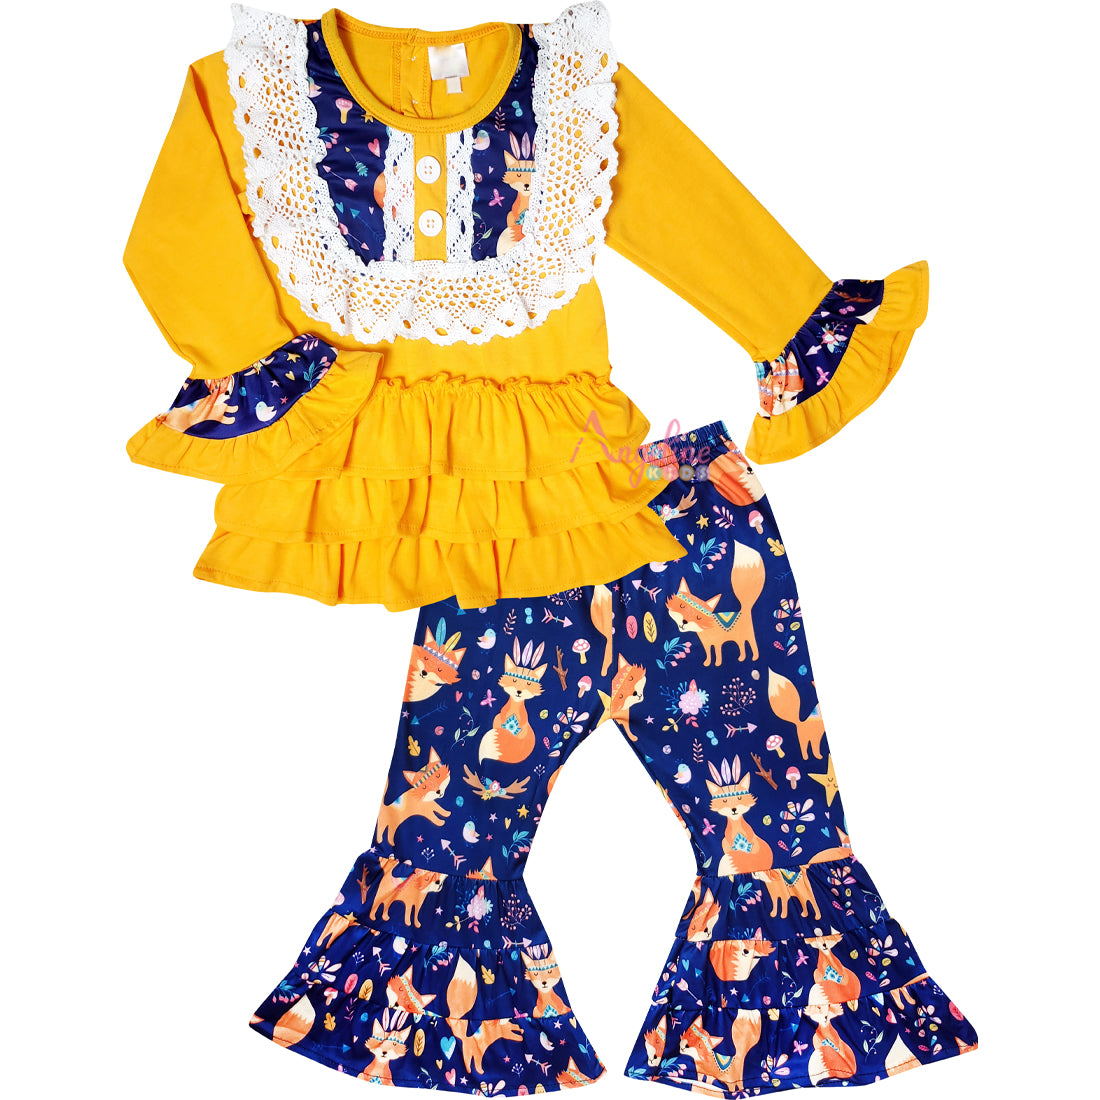 Baby Toddler Little Girl Fall Colors King Fox Ruffle Top Pants Set - Mustard/Navy - Angeline Kids